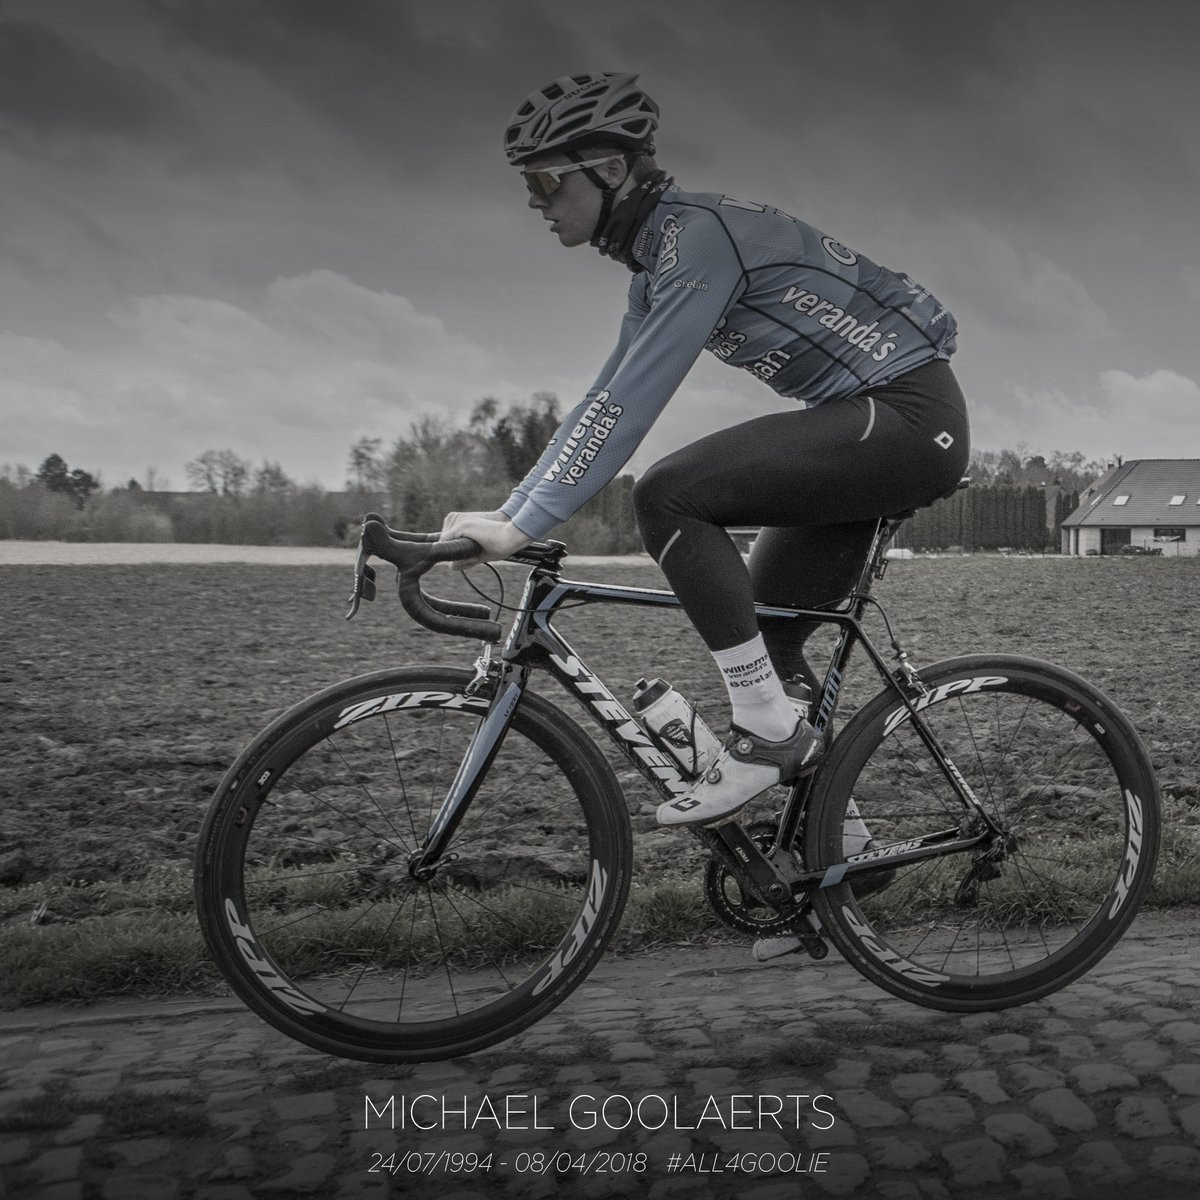 Goolaerts suffered cardiac arrest before Paris-Roubaix crash